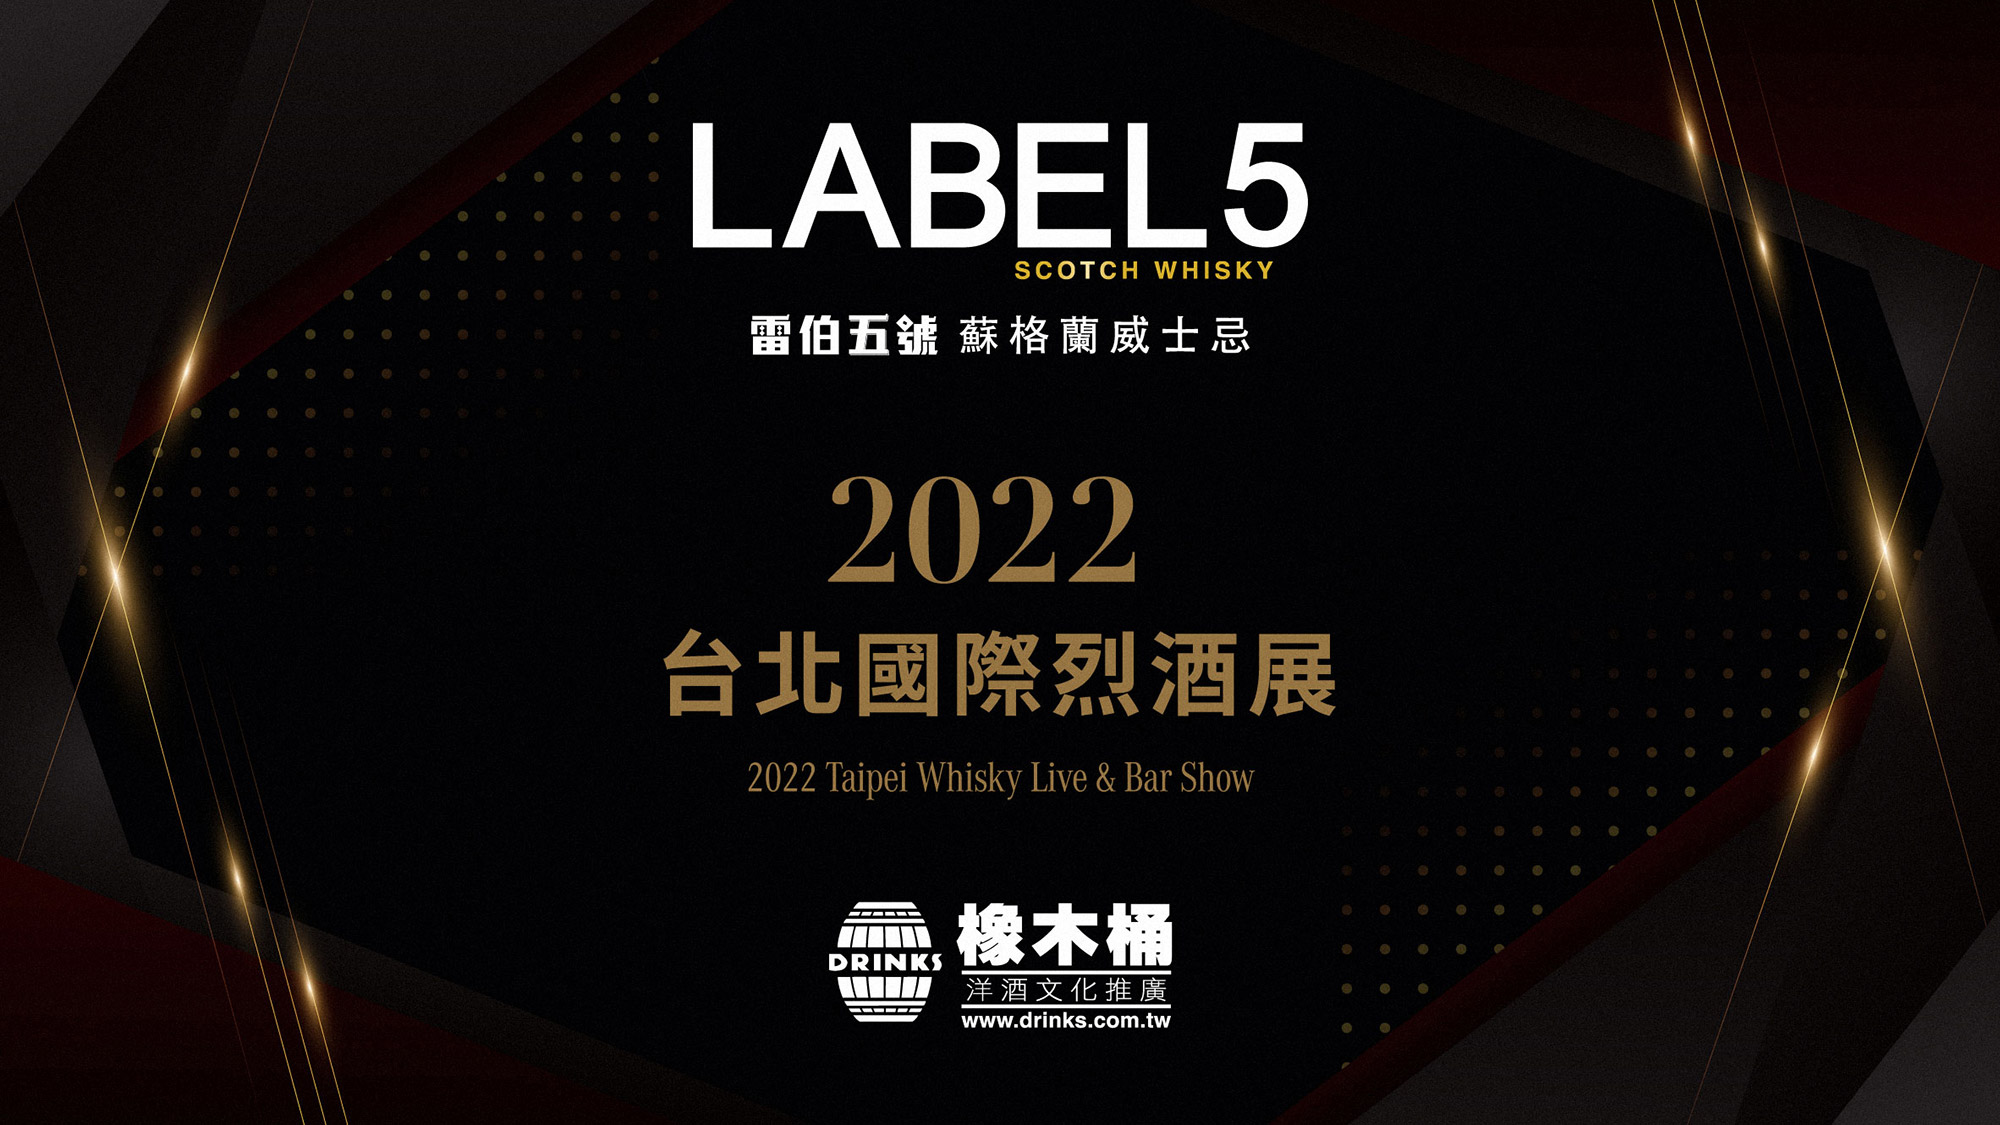 Label 5 雷伯五號 蘇格蘭威士忌2022台北國際烈酒展 參展規劃流程